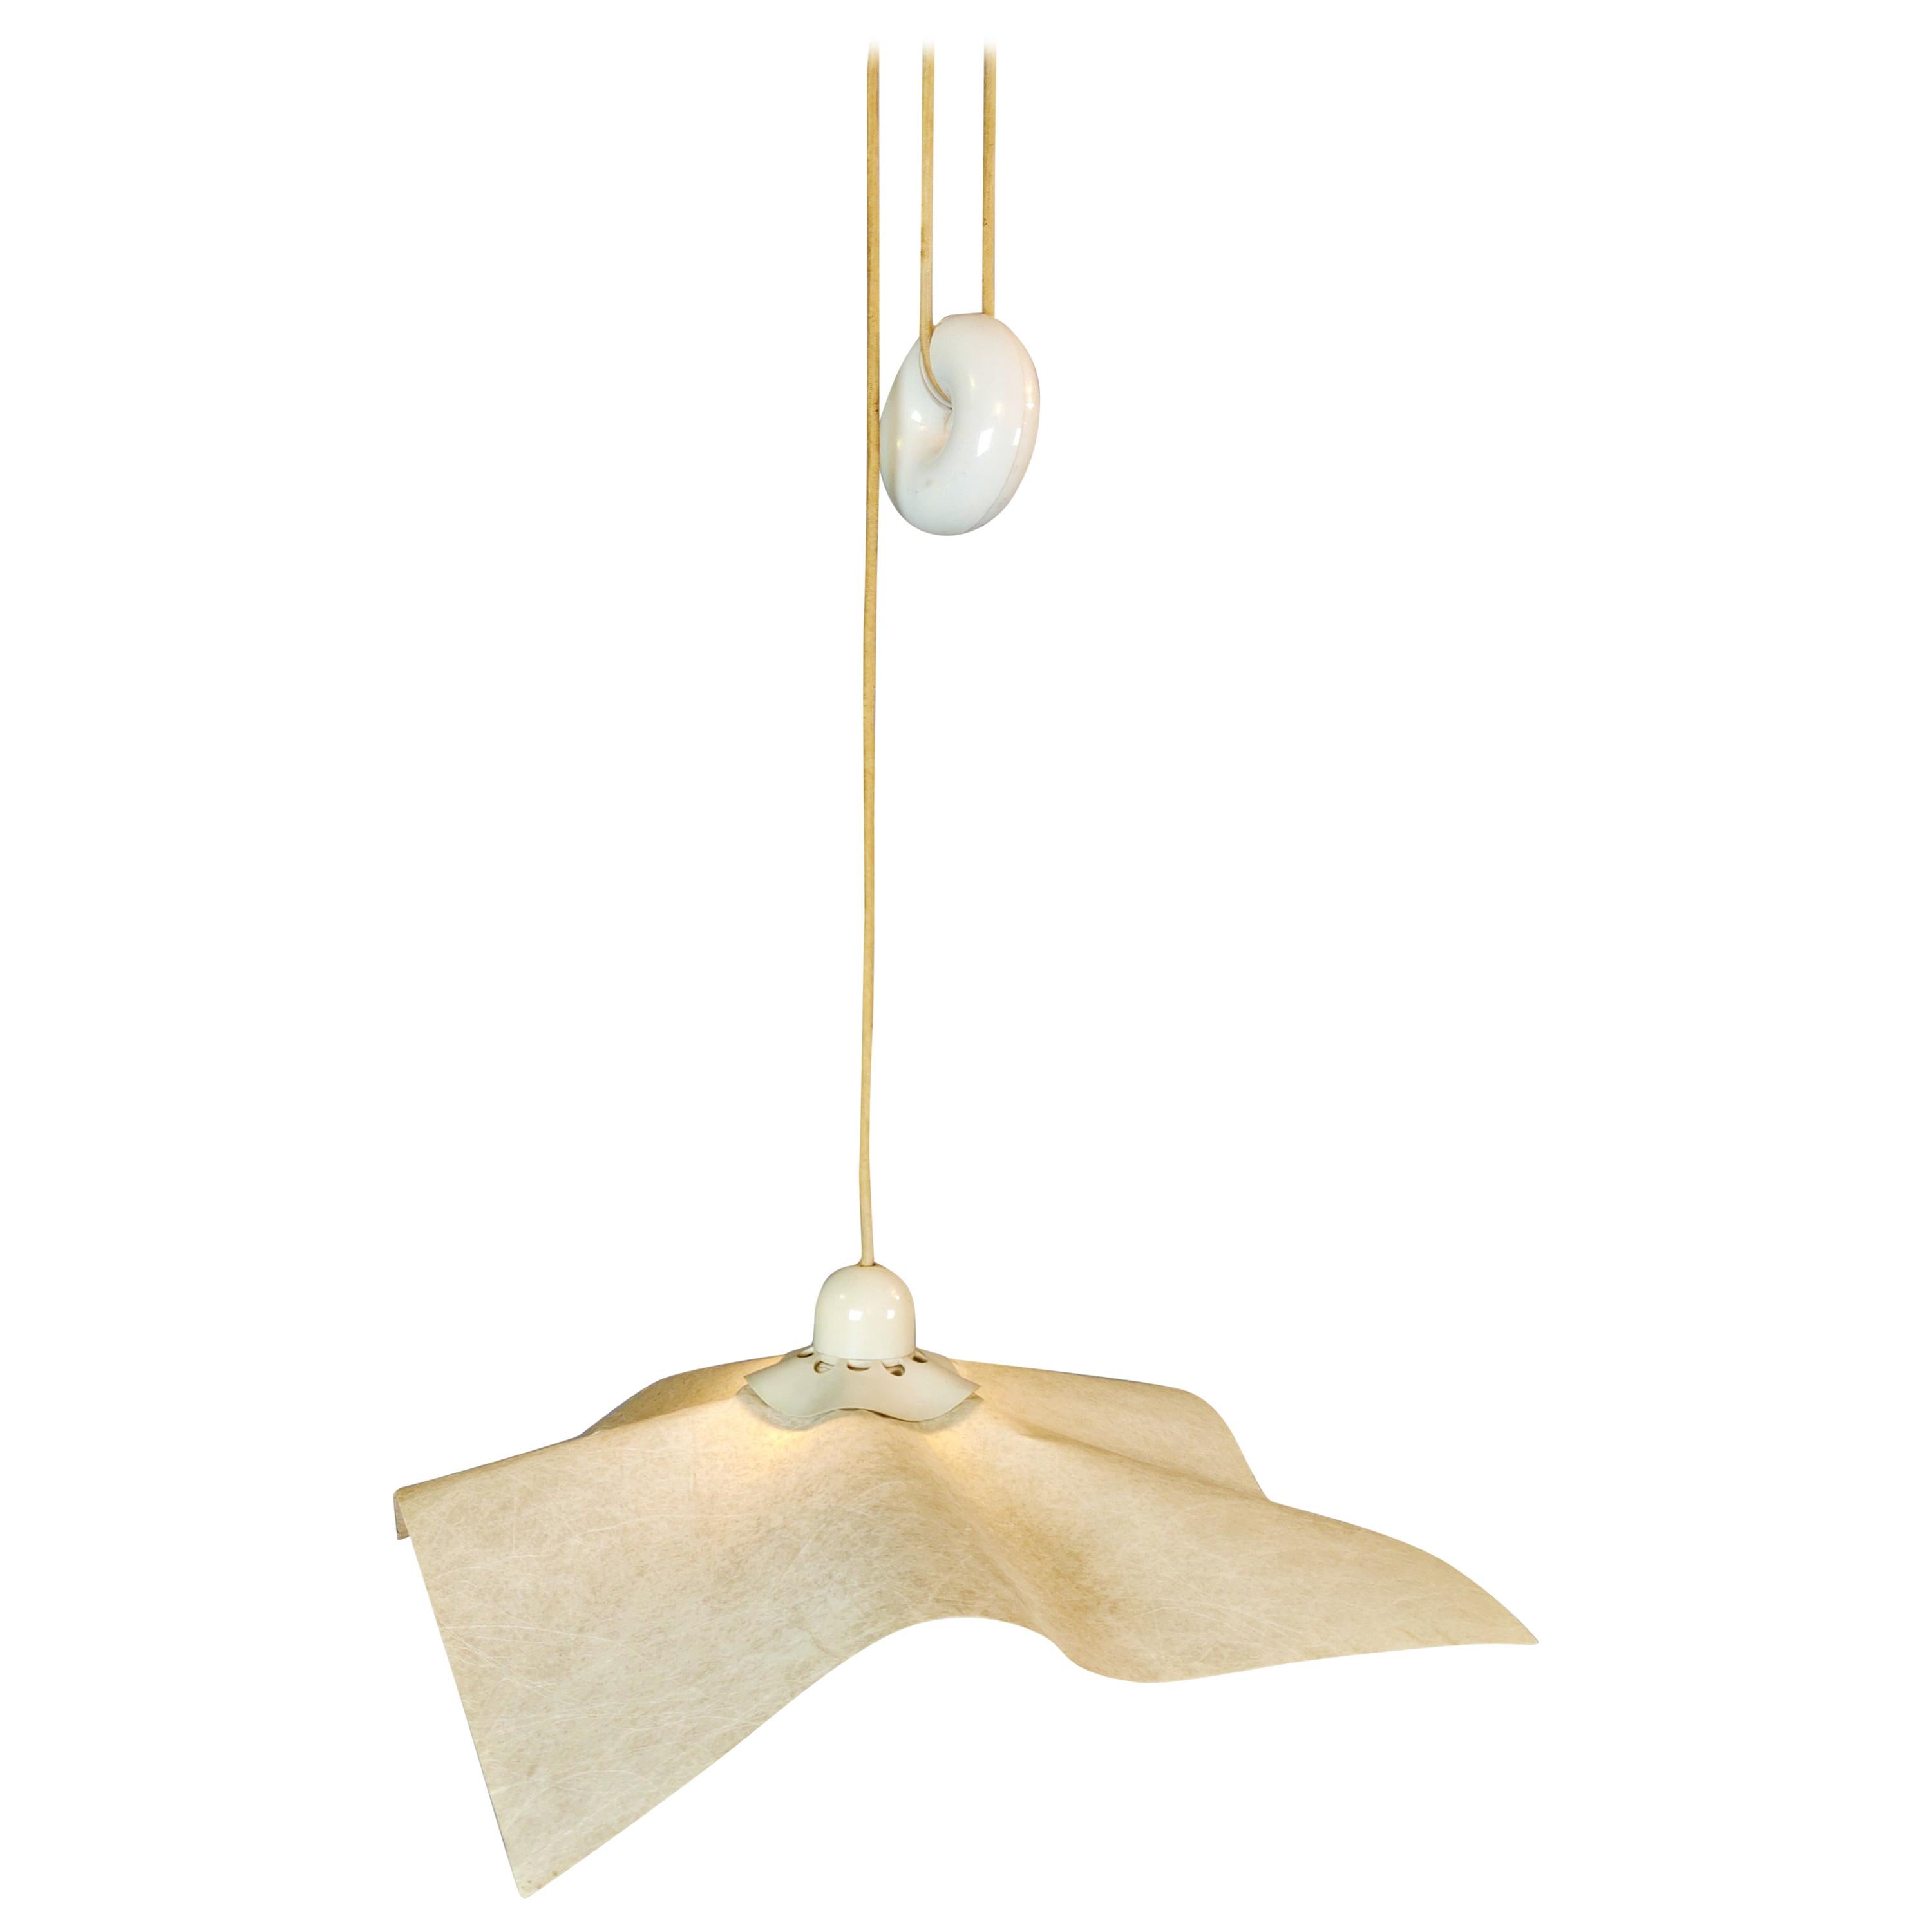 Mario Bellini "Area" Counterweight Pendant Lamp by Artemide